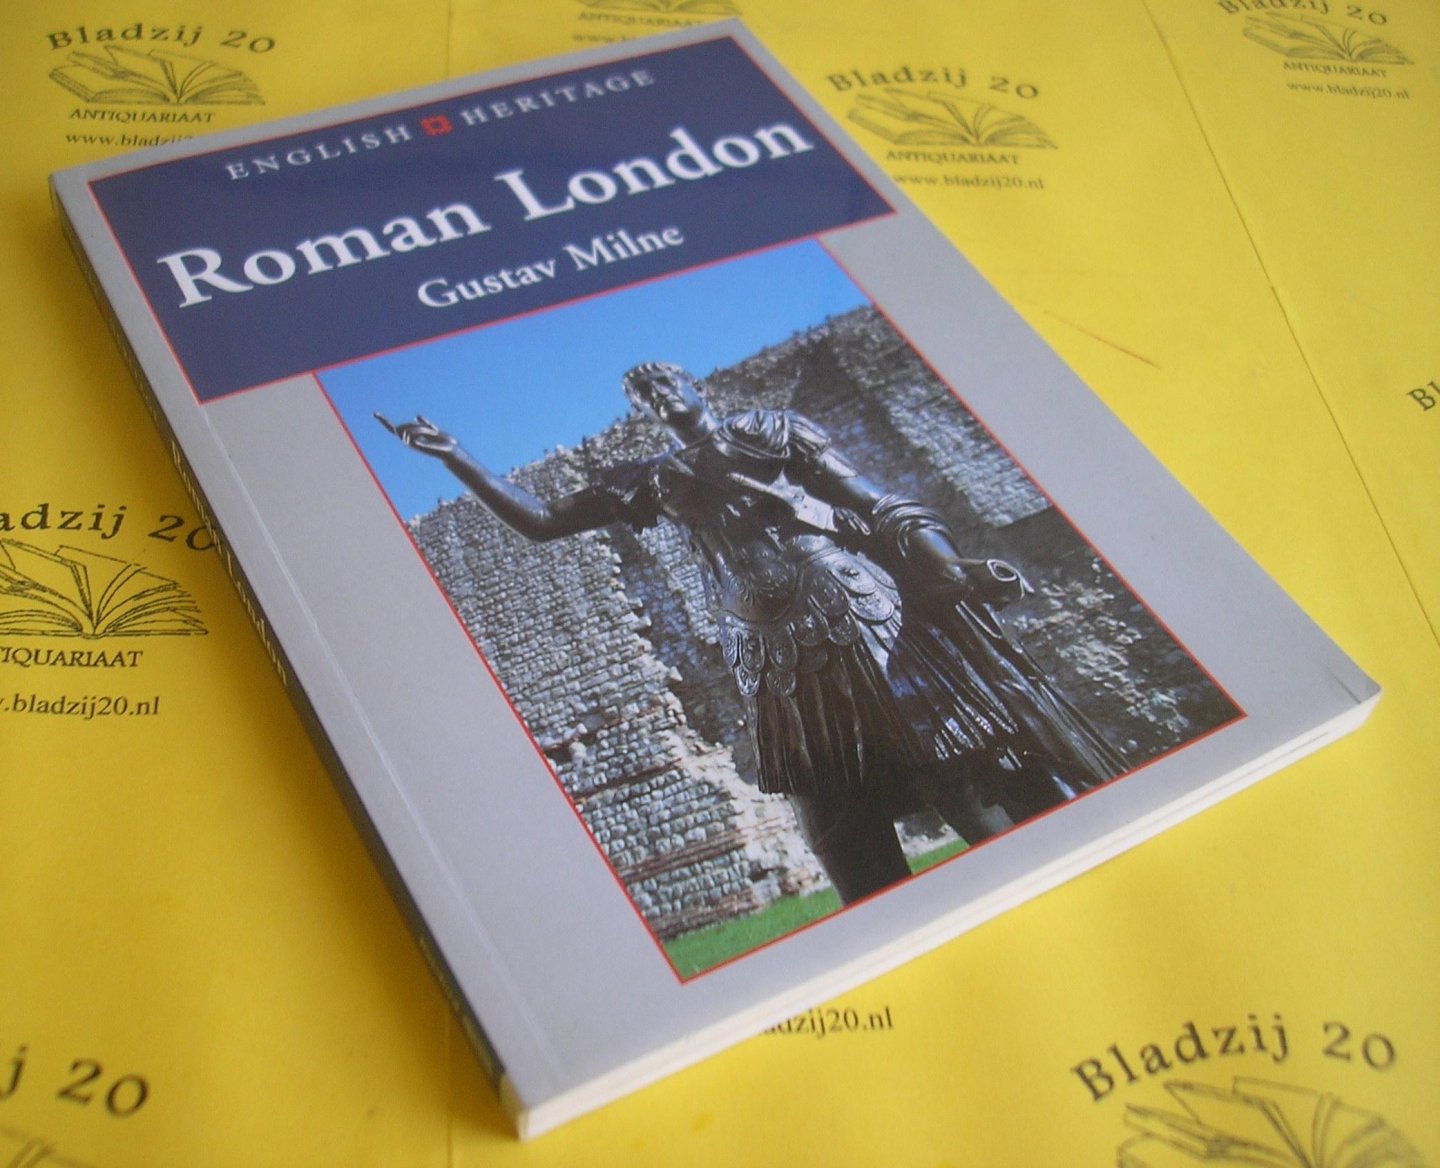 Milne, Gustav. - Book of Roman London. Urban archaeology on the nation`s capital.